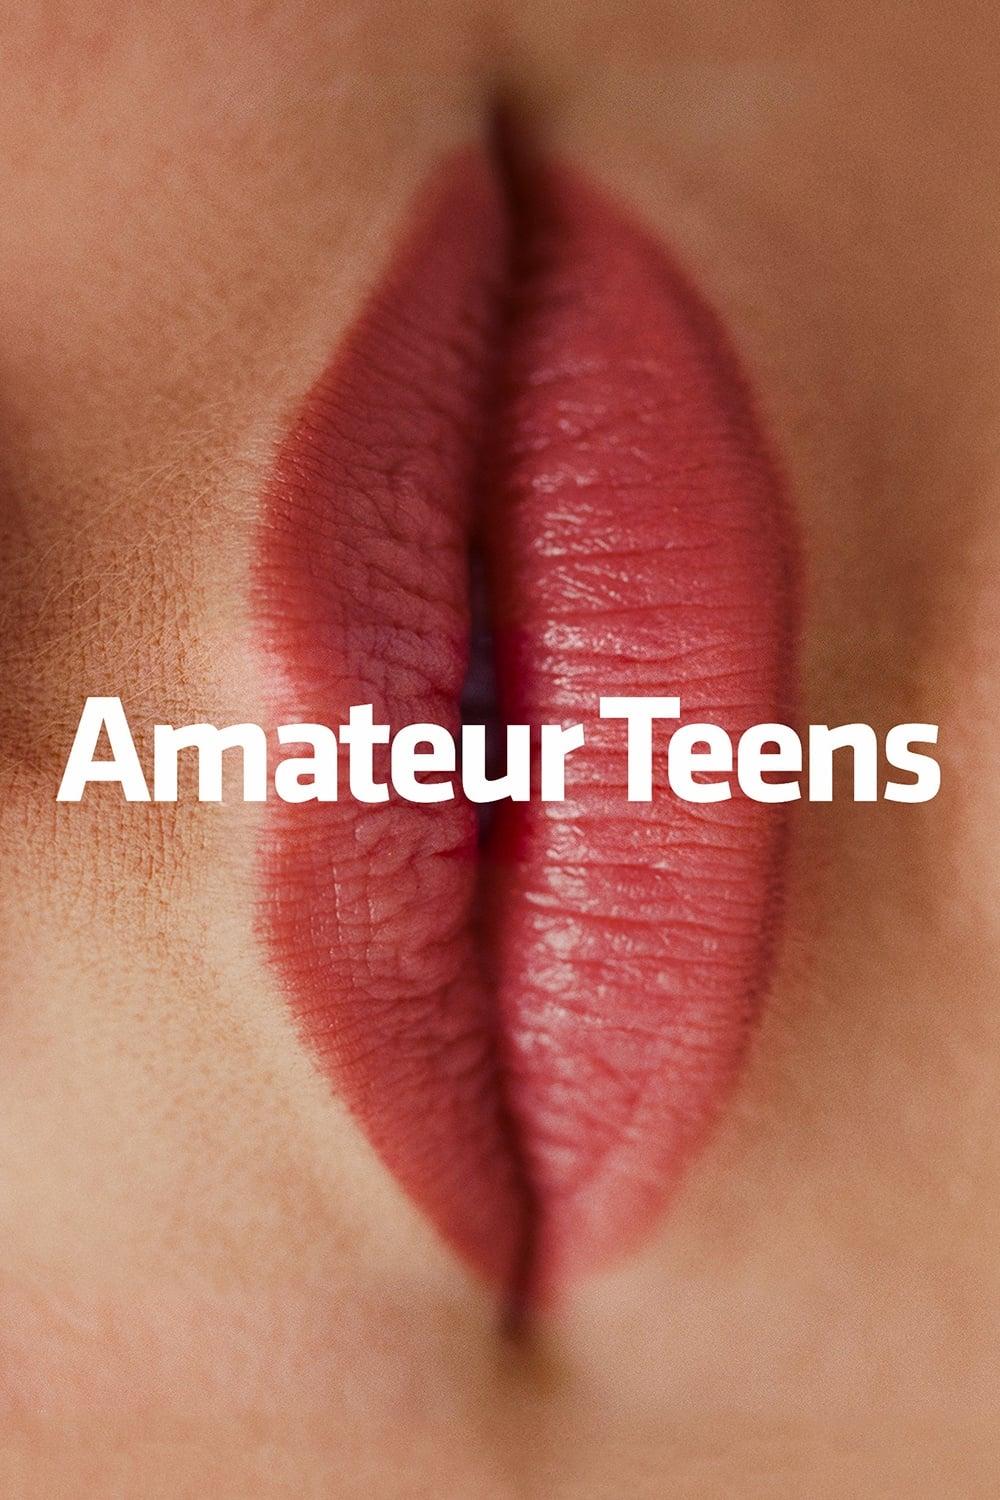 Amateur Teens poster